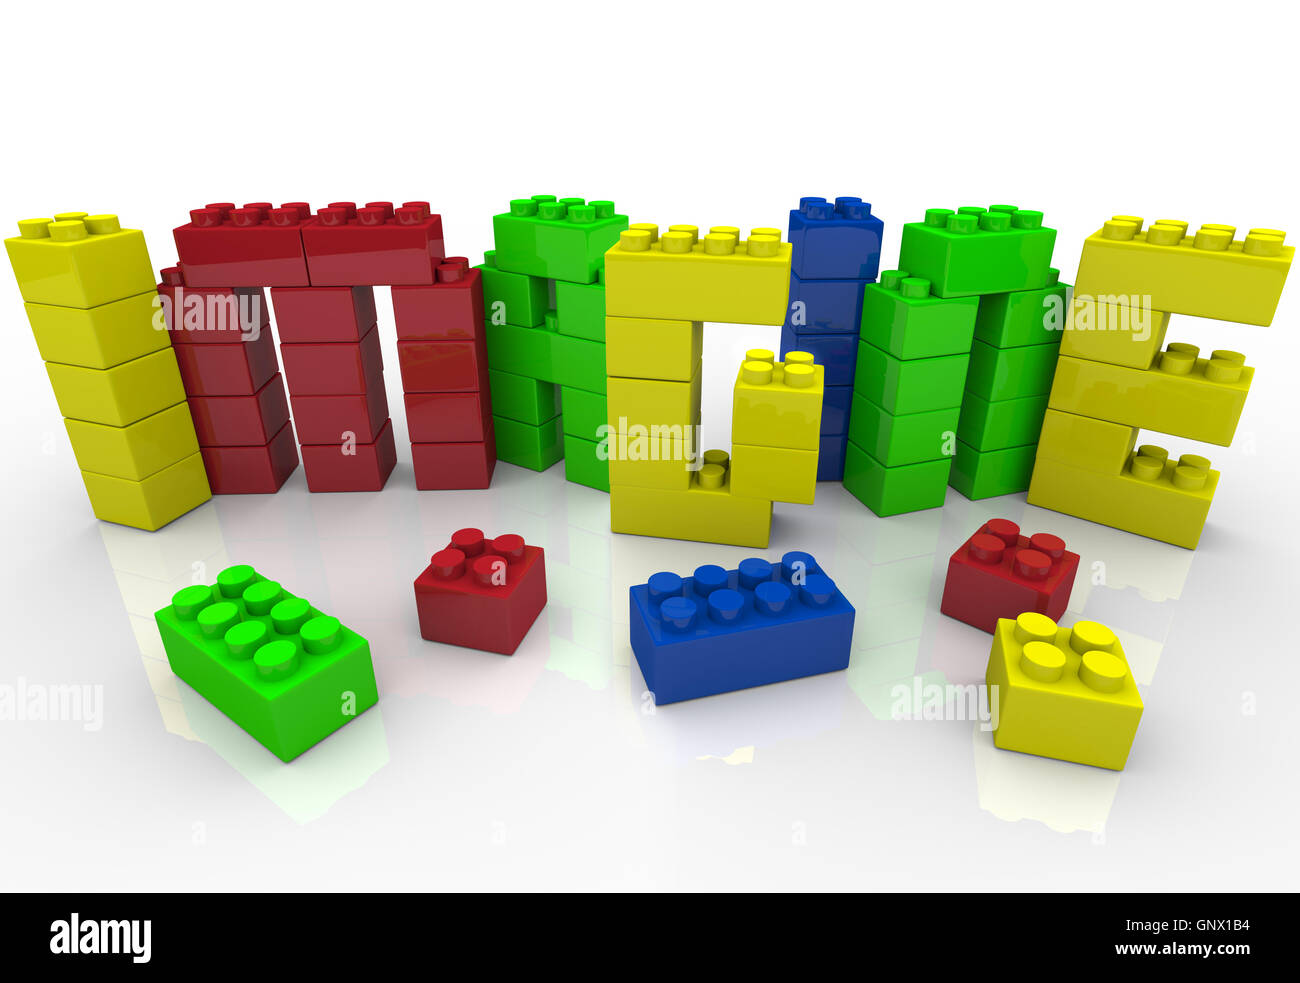 Imagine Word in Toy Plastic Blocks Idea Creativity Stock Photo